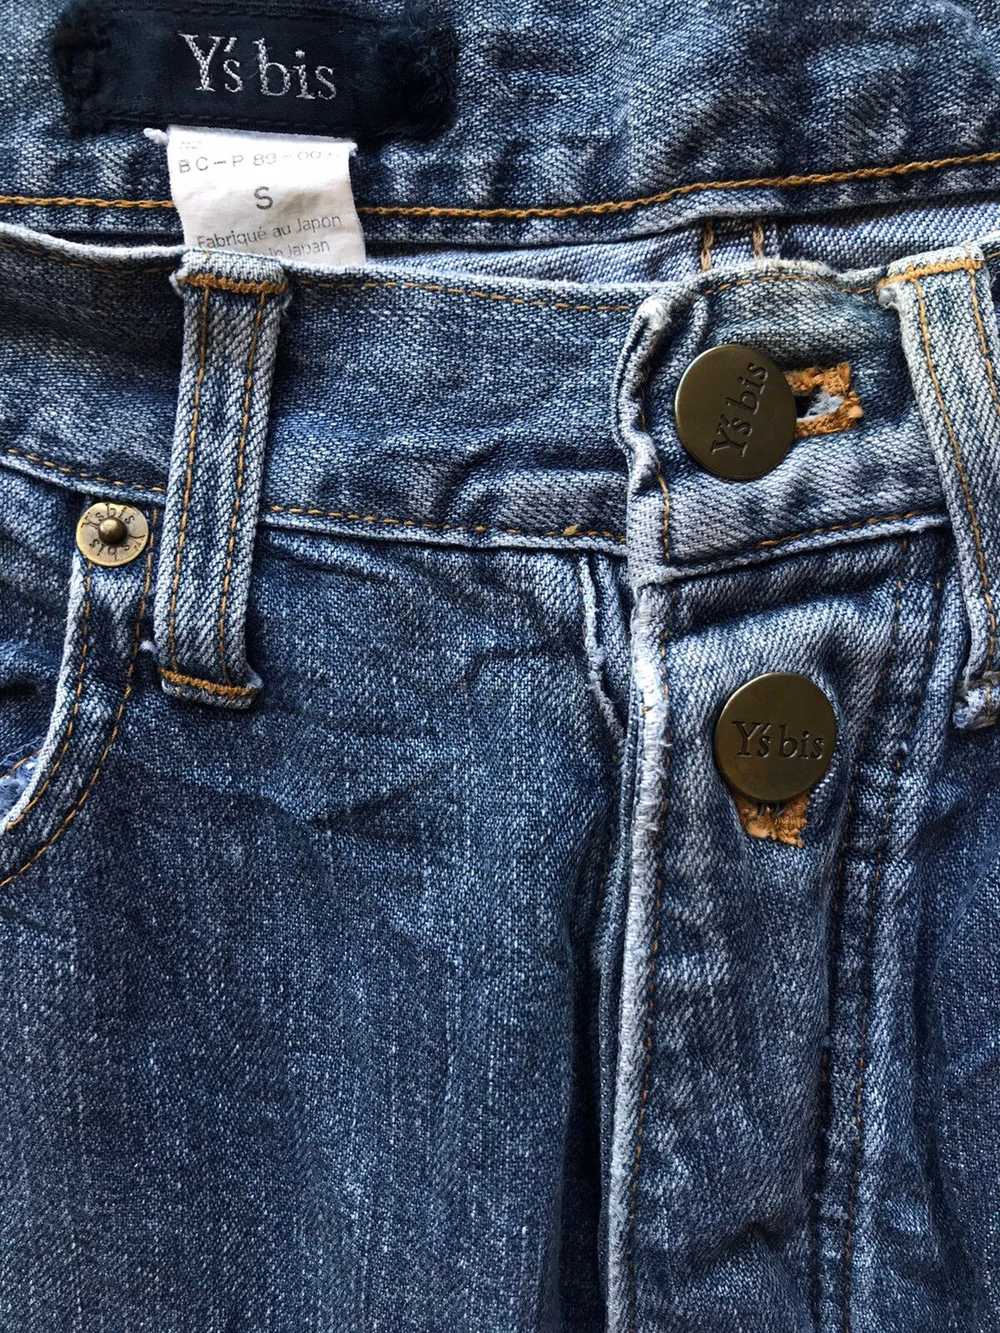 Yohji Yamamoto Ys Bis 3 Quarter Cropped Jeans - image 5